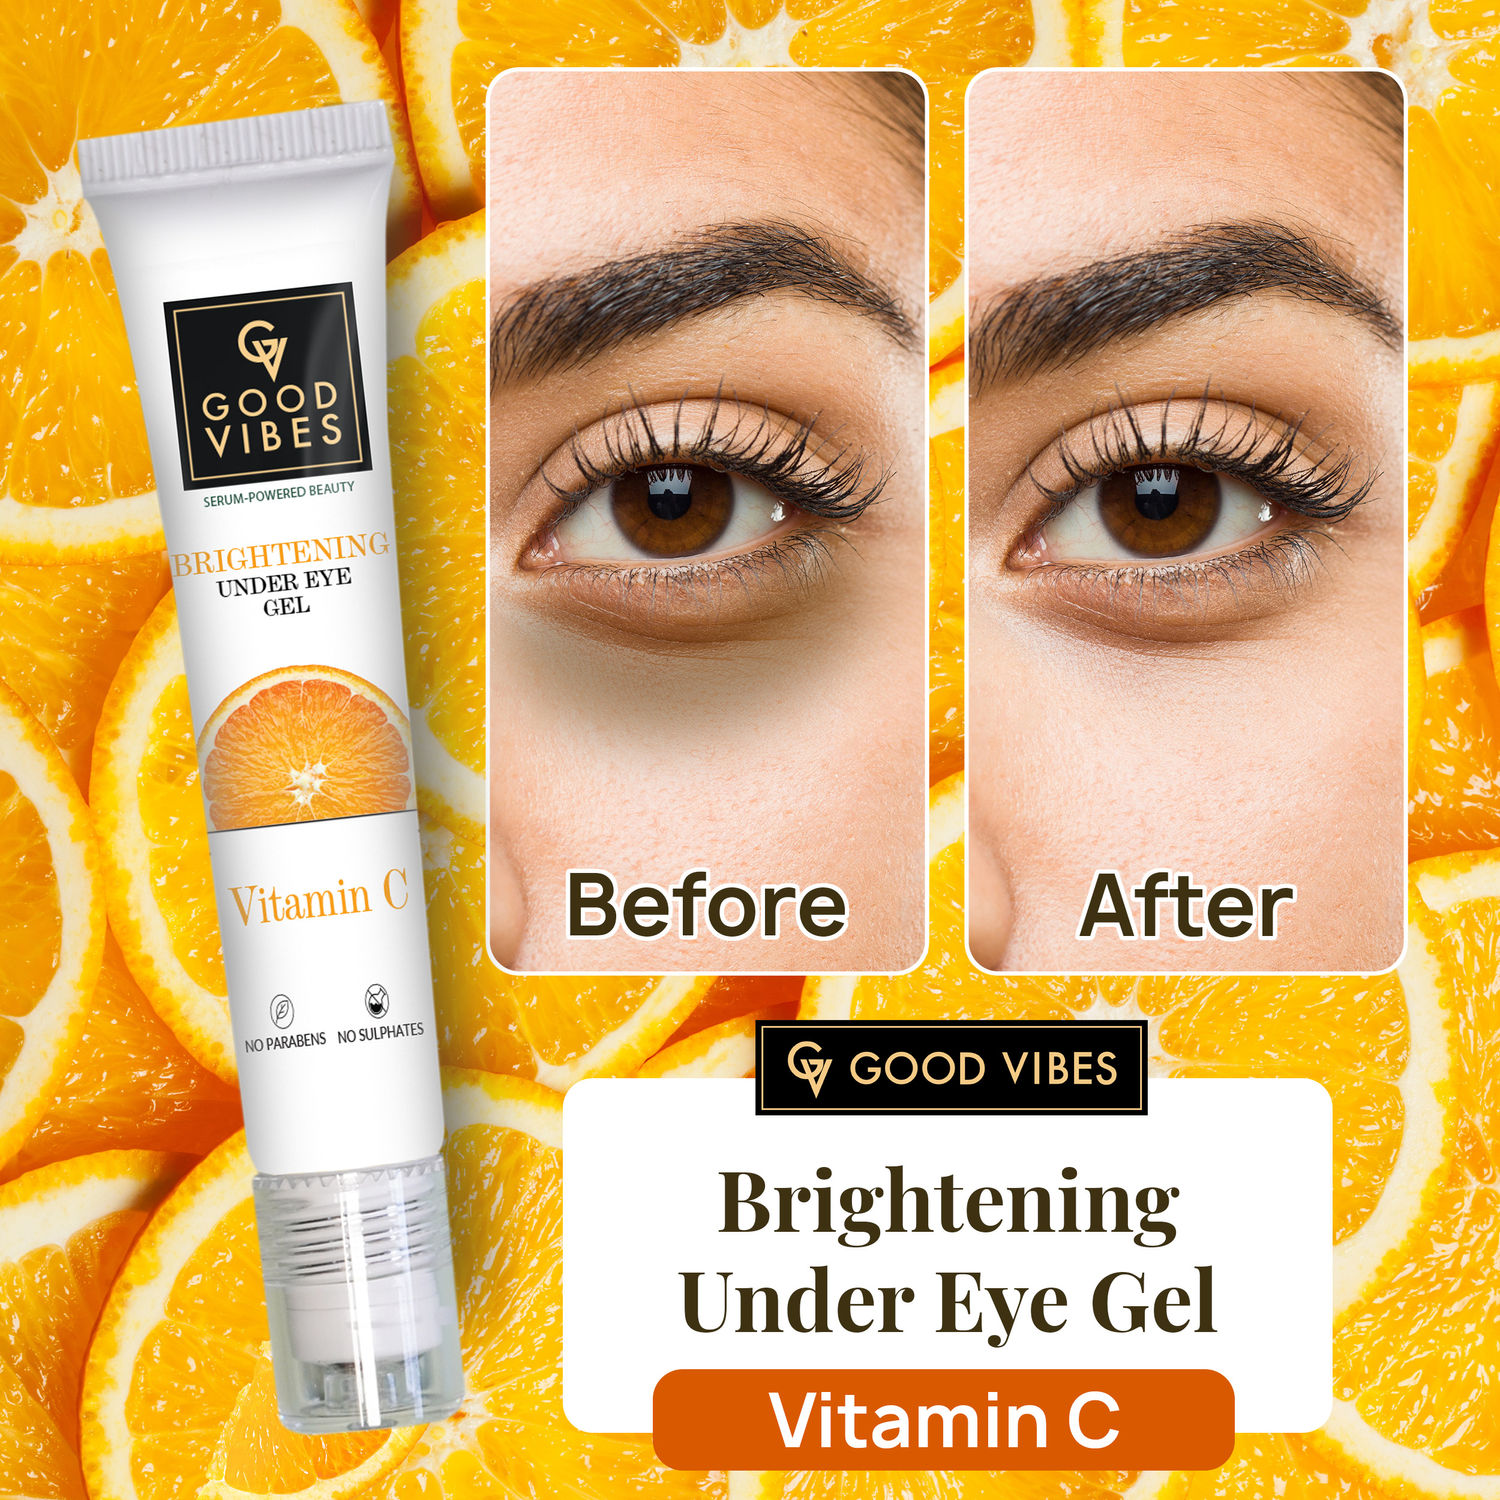 Good Vibes Vitamin C Brightening Under Eye Gel with Power of